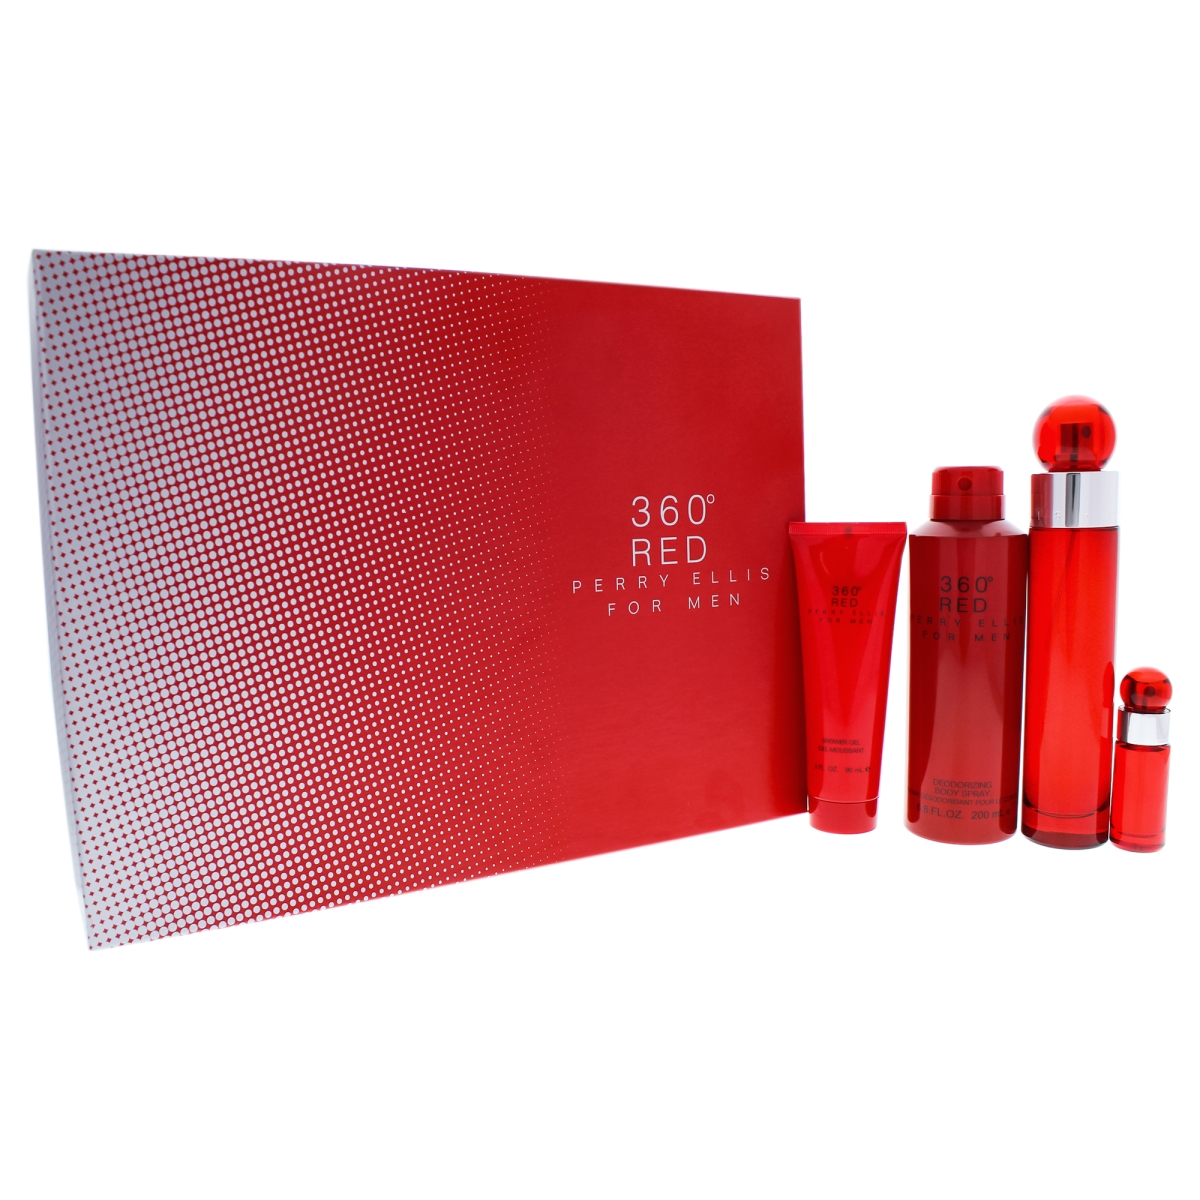 I0086845 4 Piece 360 Red Gift Set For Men